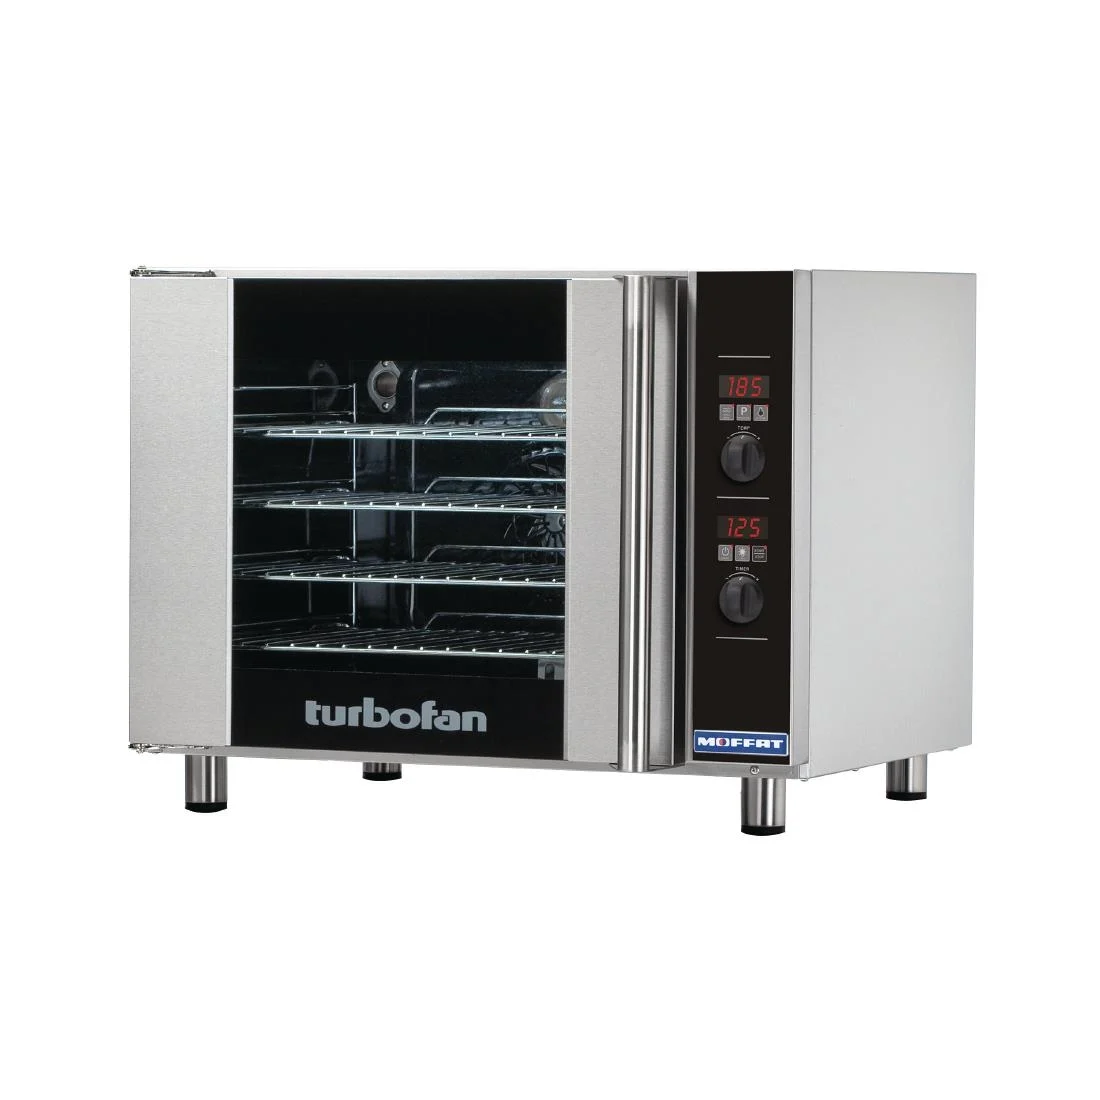 Turbofan E31D4 - Digital Electric Convection Oven